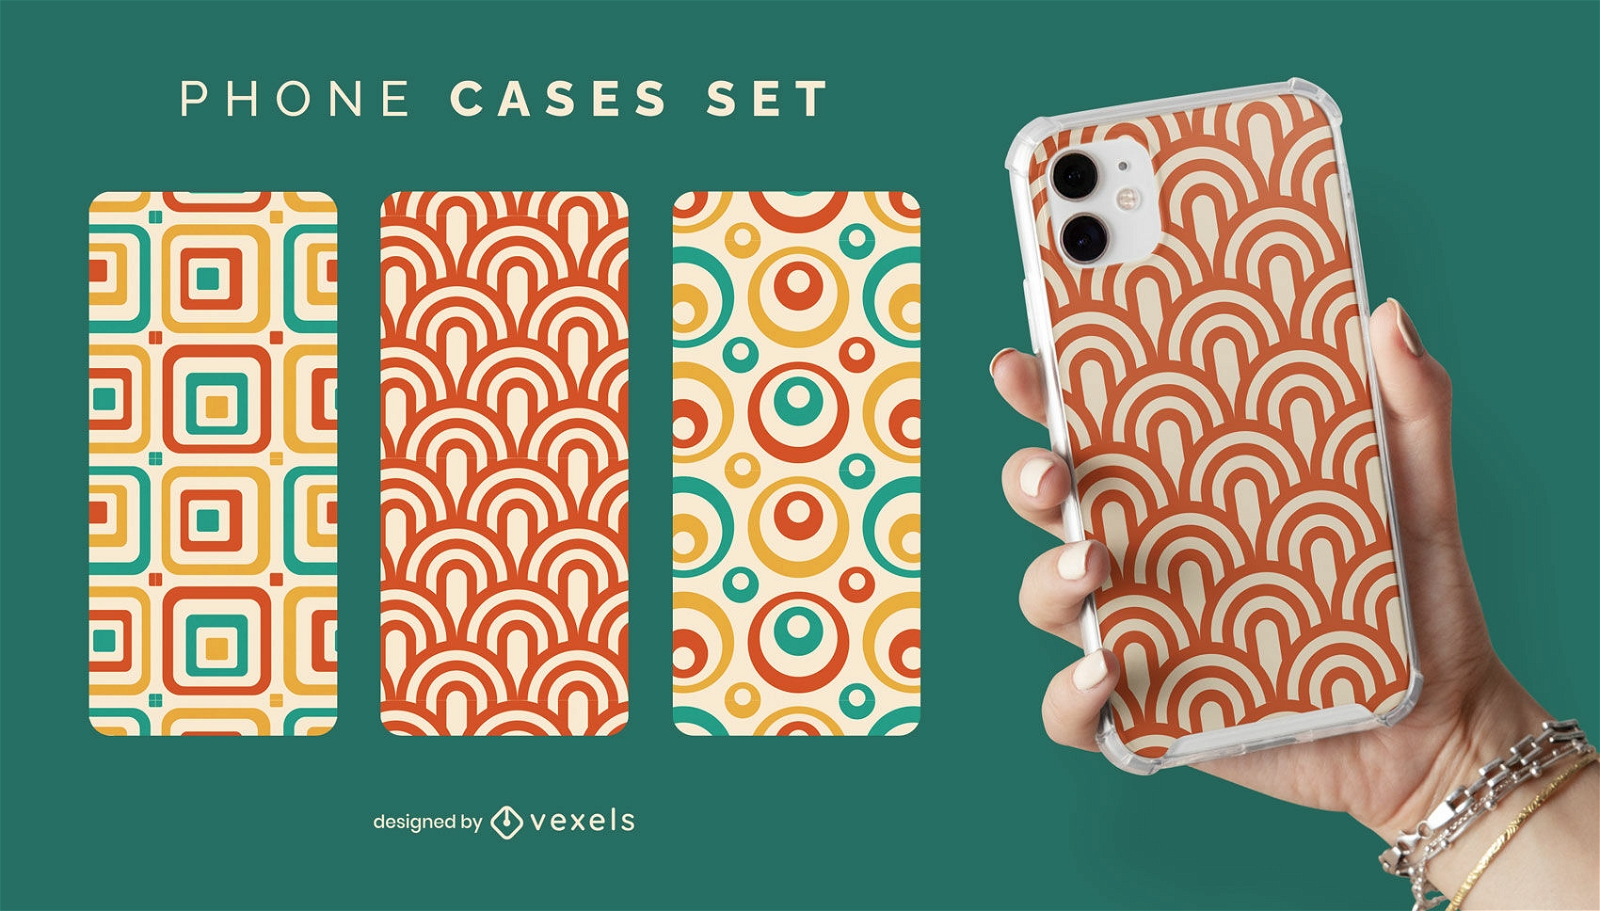 Retro dynamic patterns phone cases set design